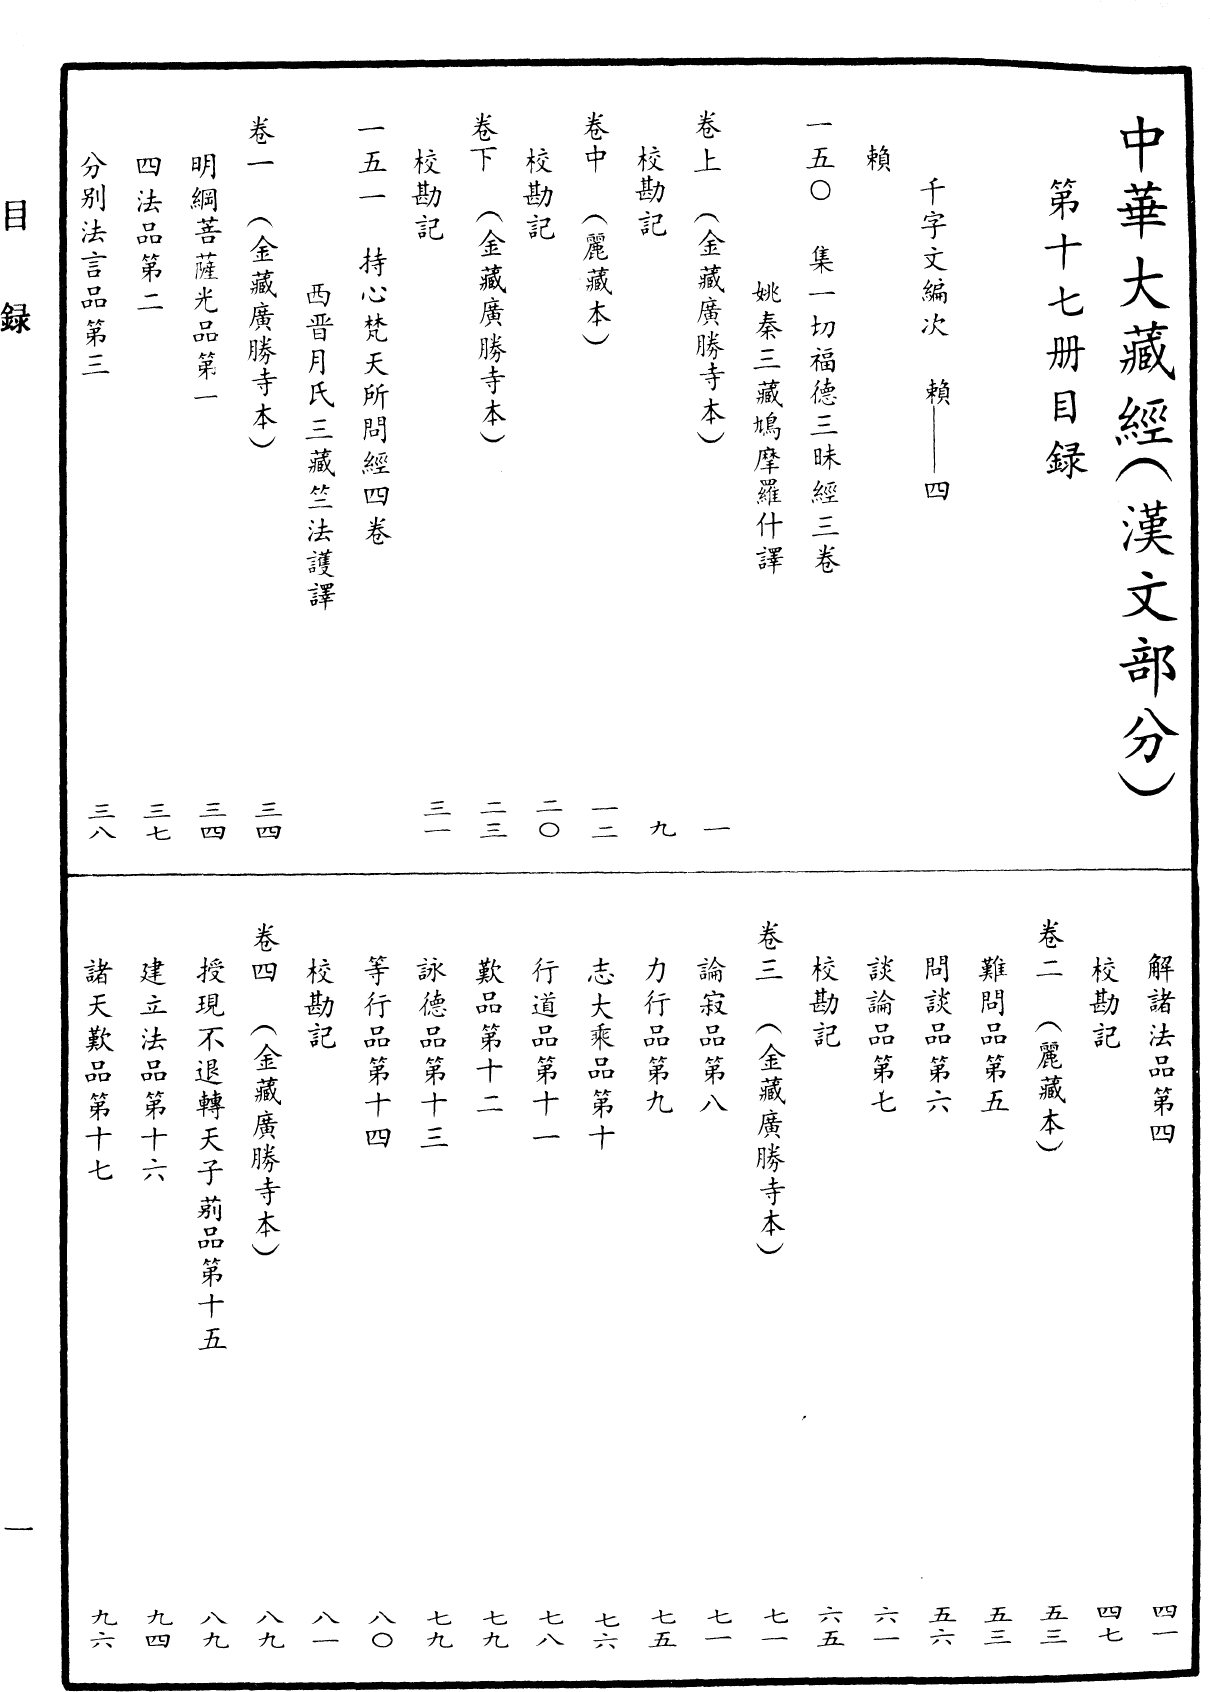 File:《中華大藏經》 第17冊 目録 (1).png